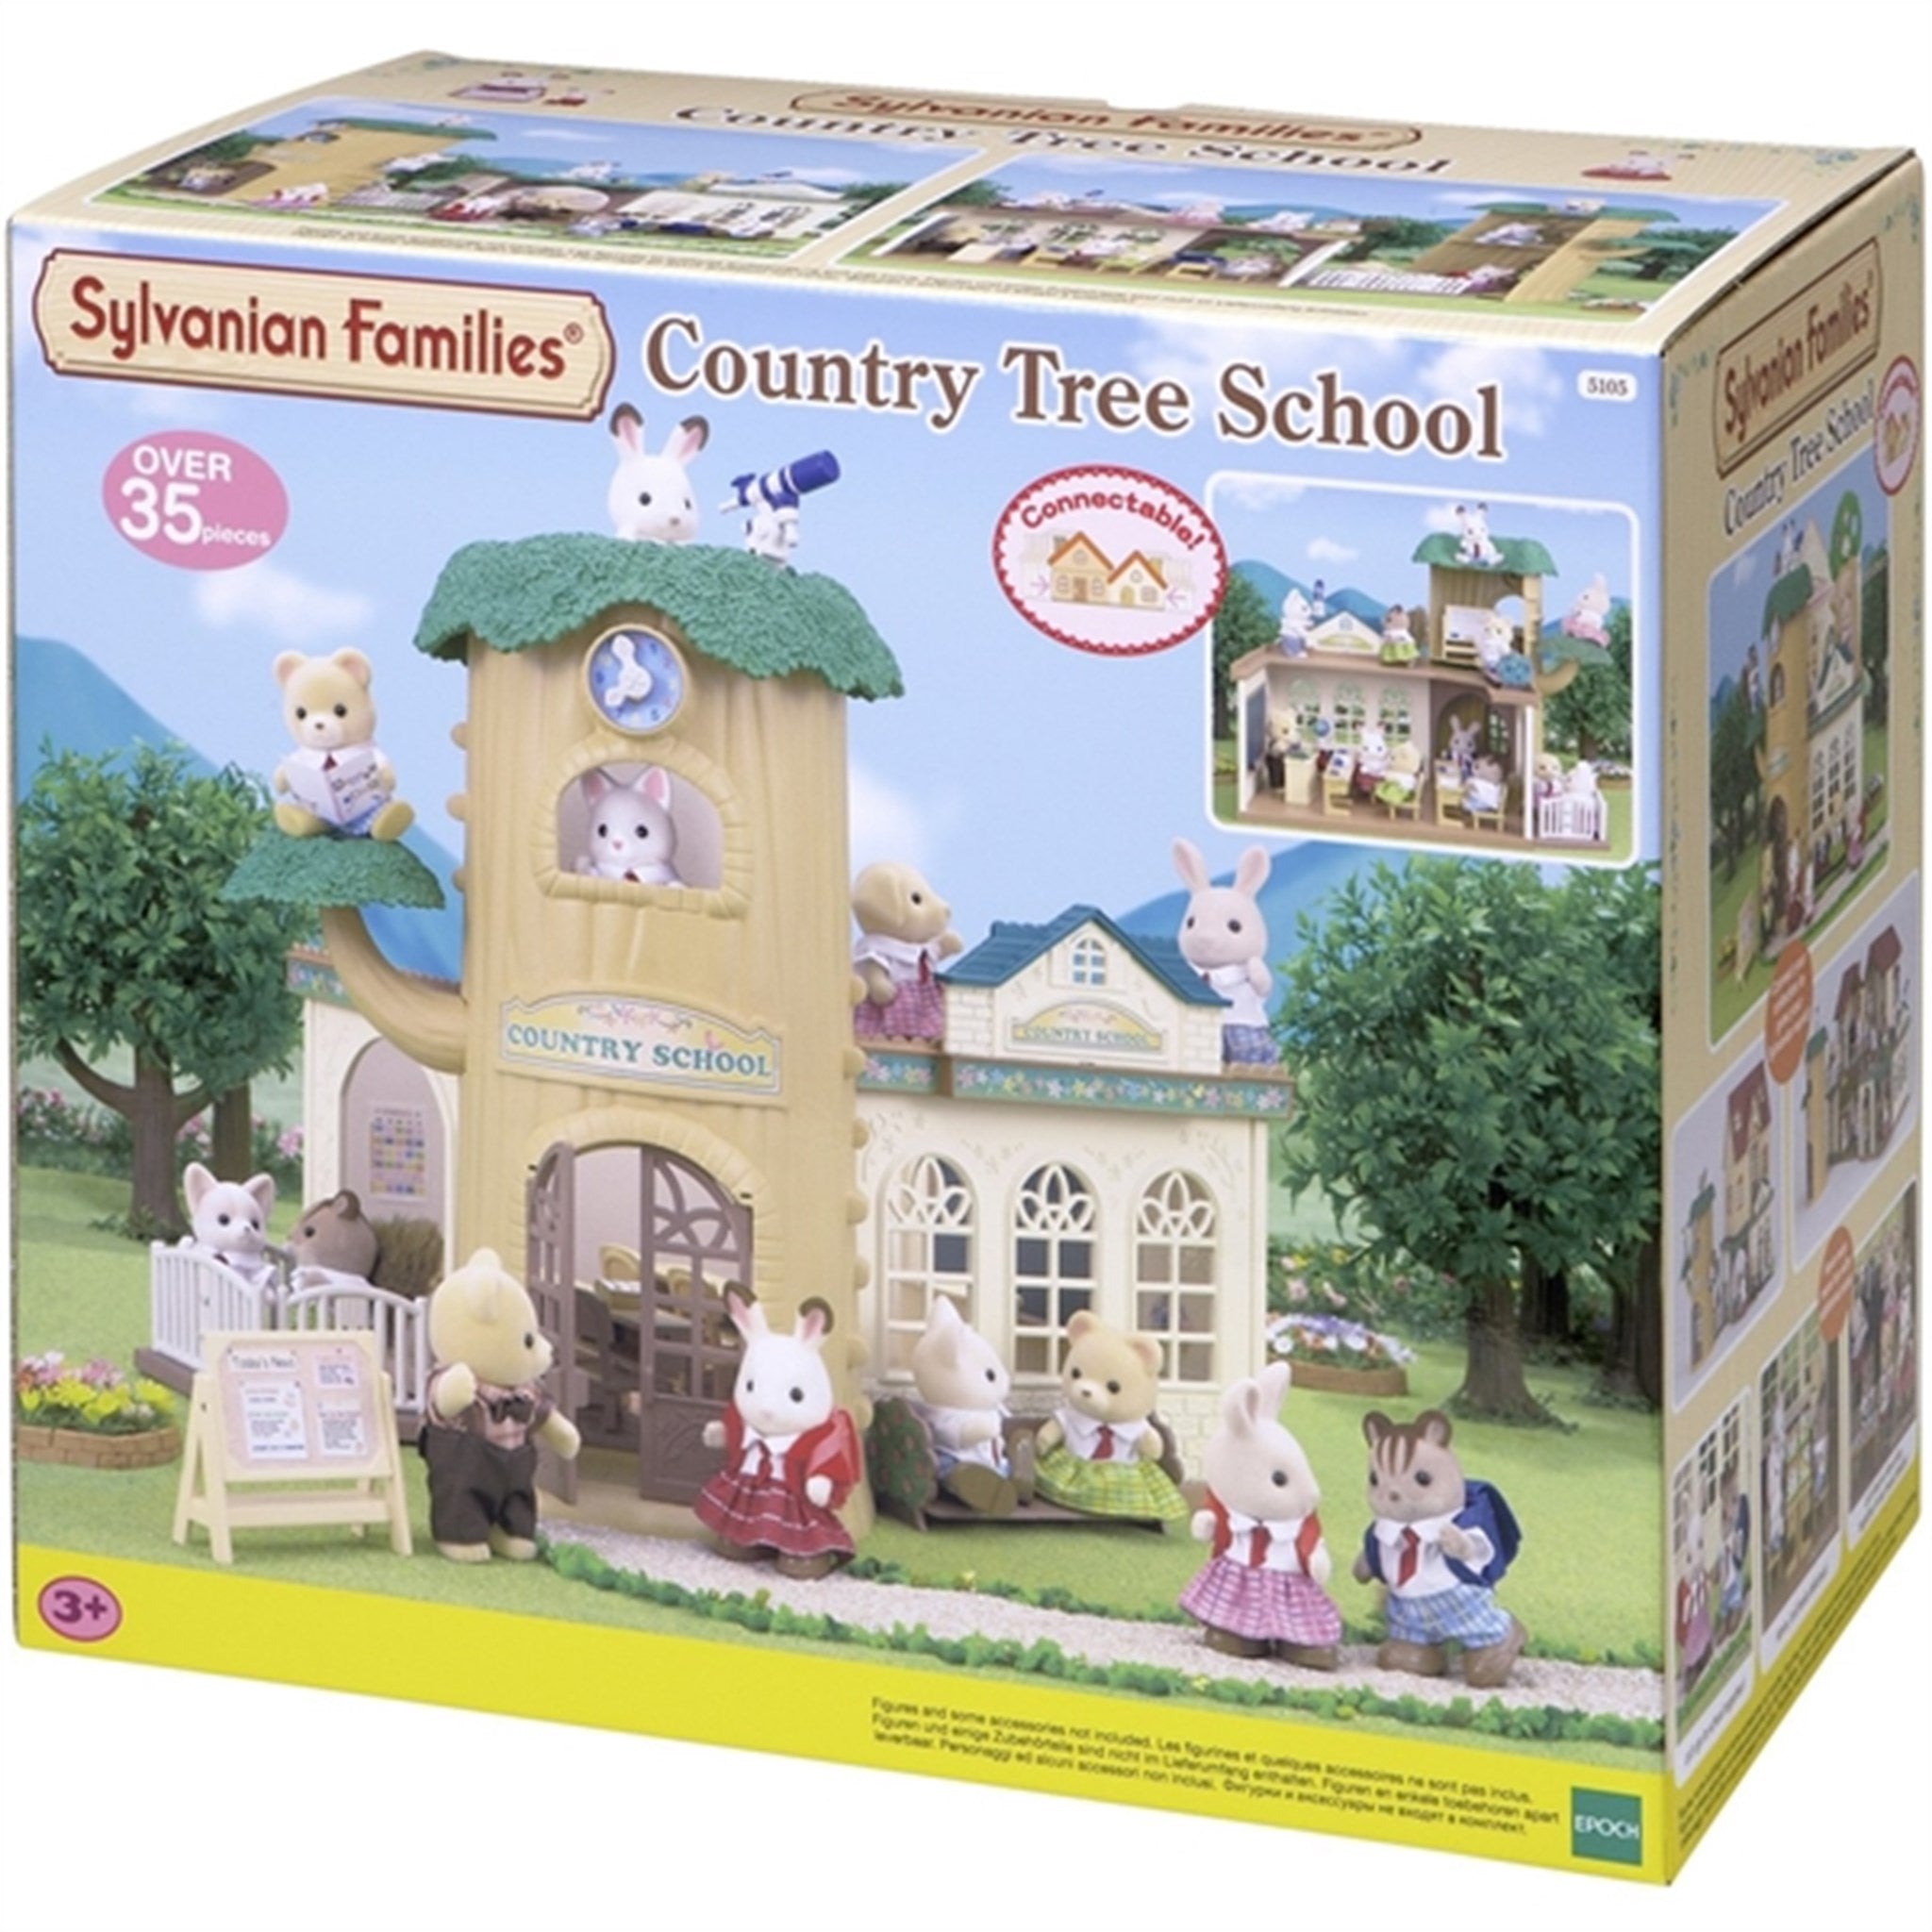 Sylvanian Families® Country Tree School